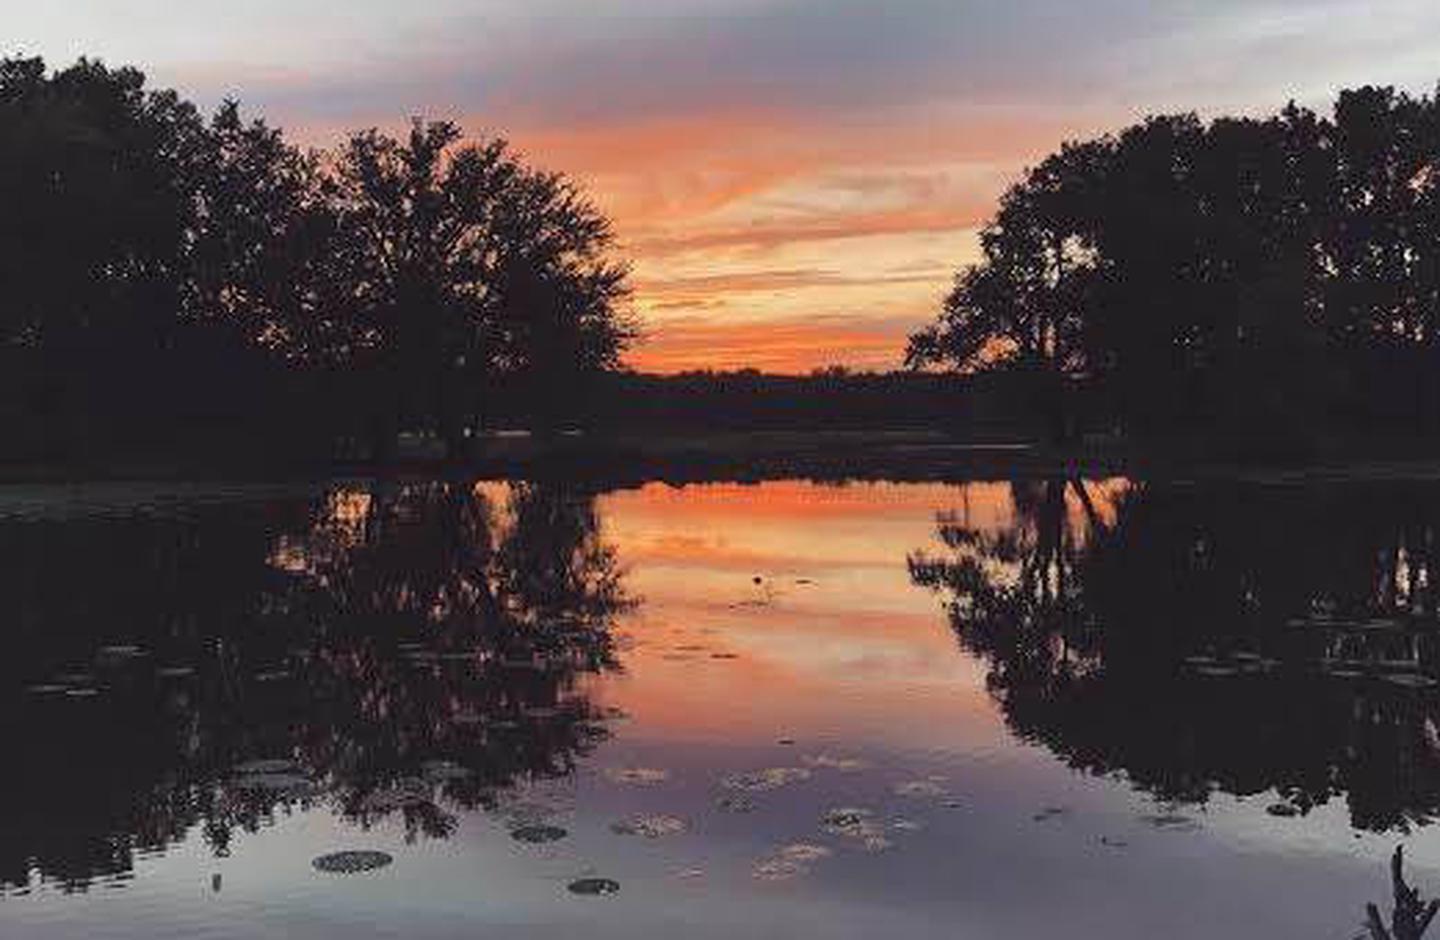 SunsetSunset along banks of the Mississippi River in Blackhawk Park.